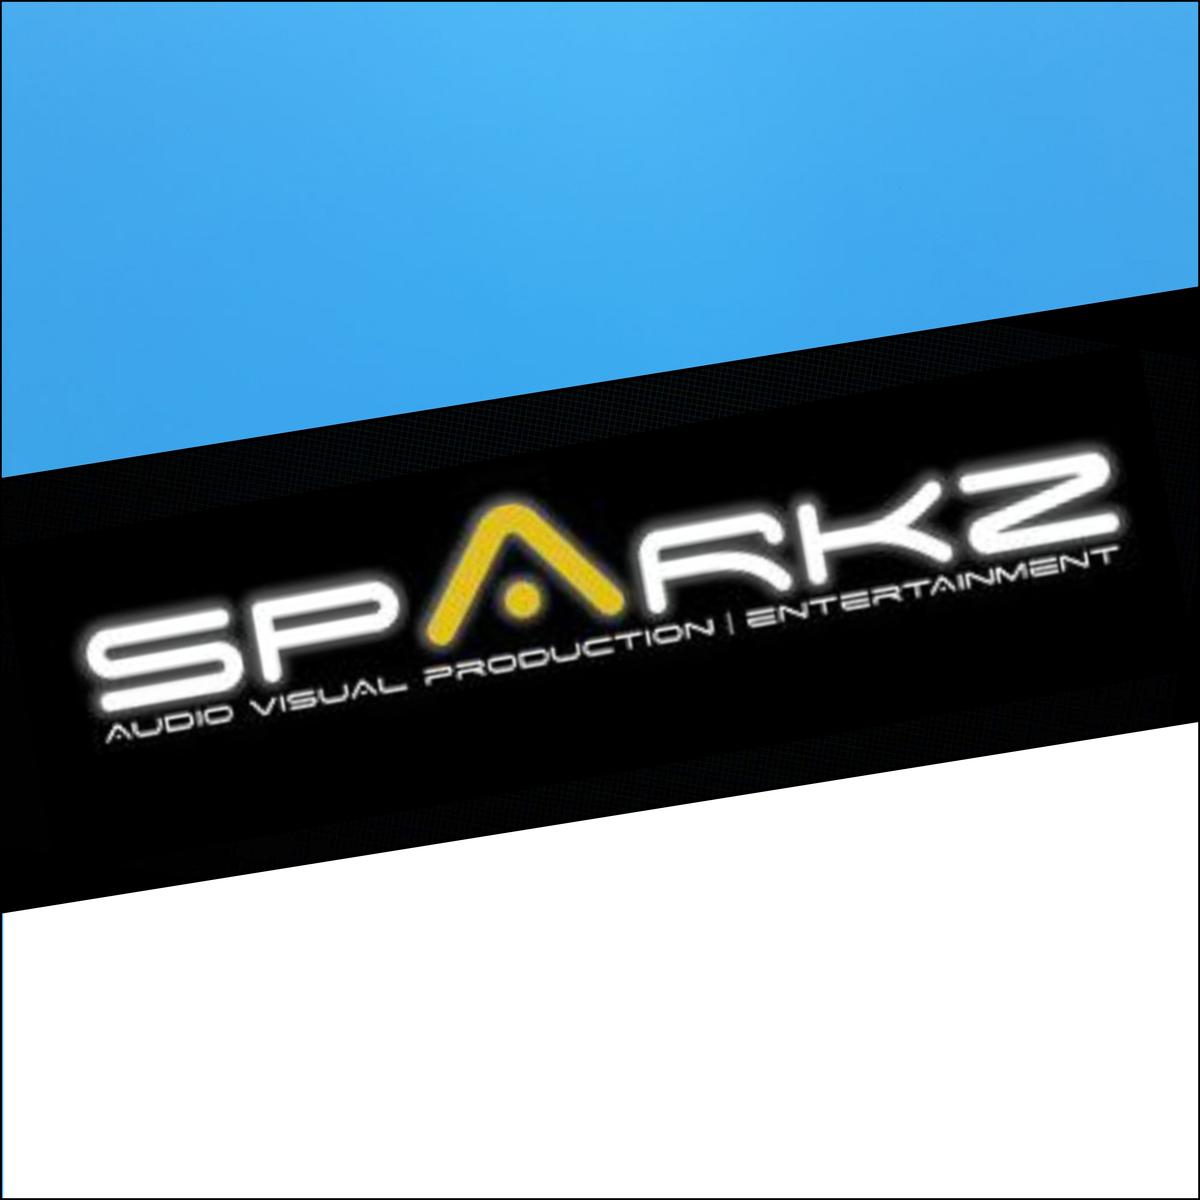 Sparkz's images